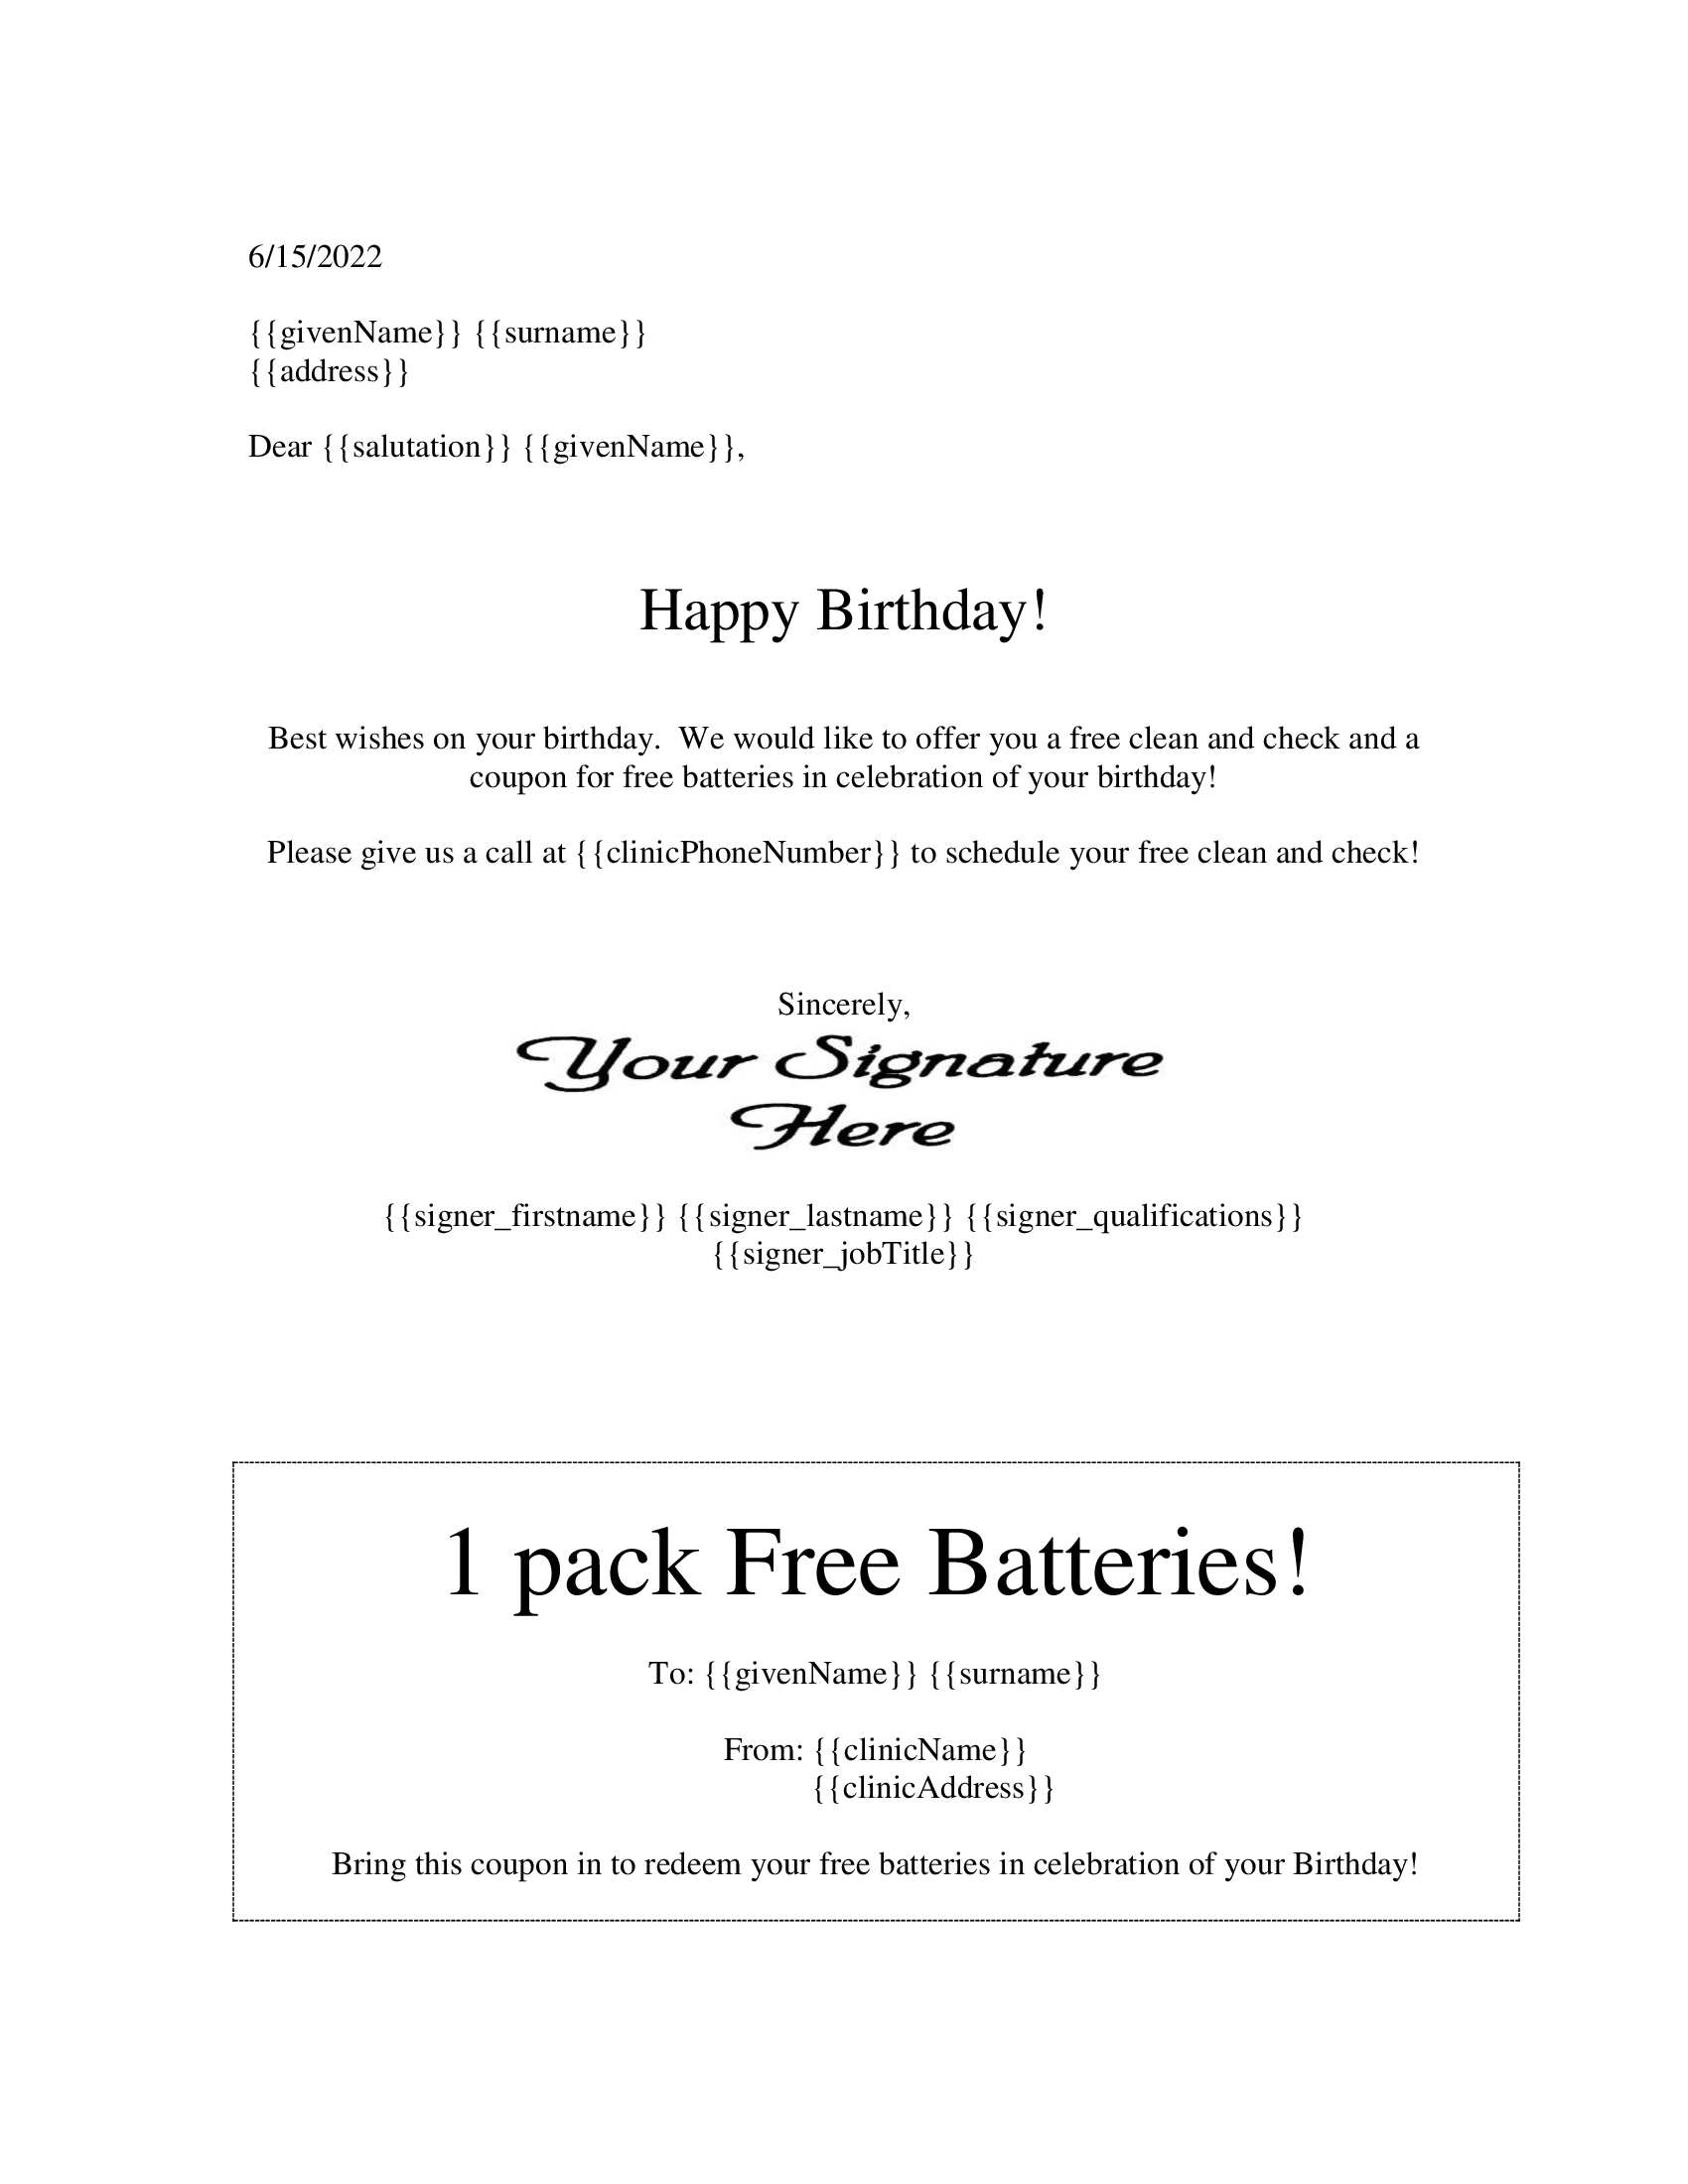 birthday-letter-blueprint-solutions